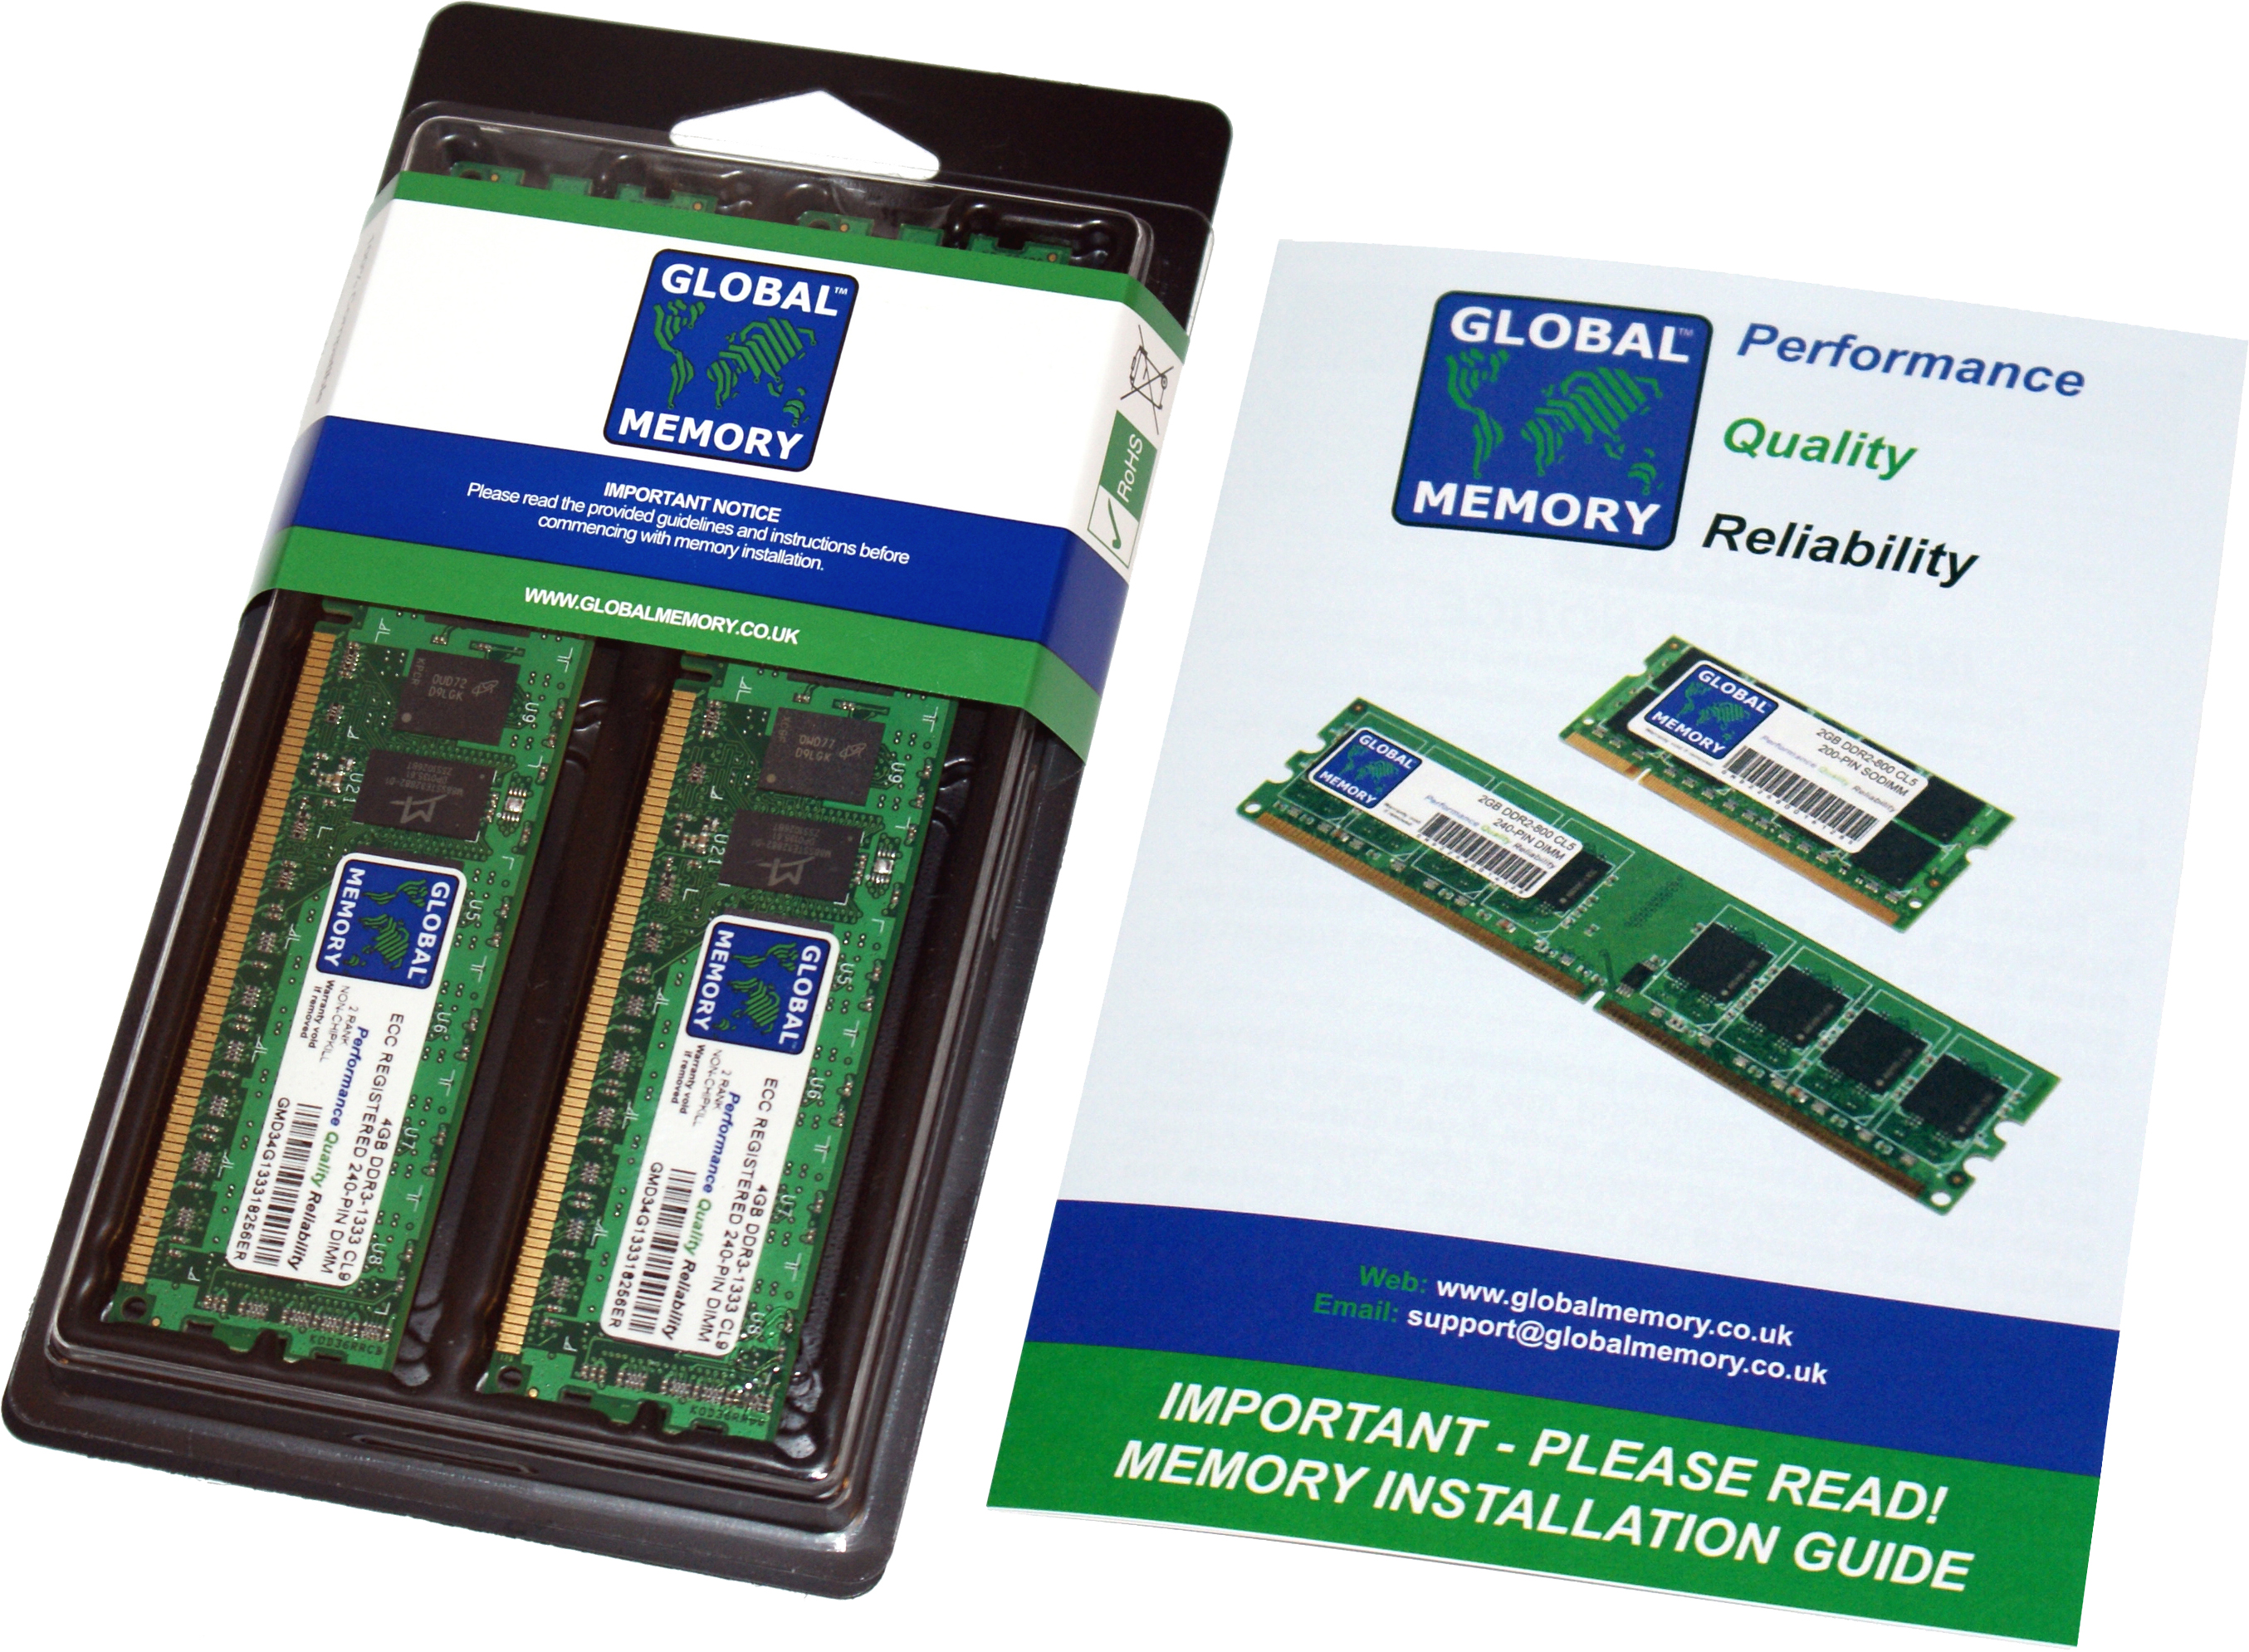 32GB (2 x 16GB) DDR4 2666MHz PC4-21300 288-PIN ECC REGISTERED DIMM (RDIMM) MEMORY RAM KIT FOR LENOVO SERVERS/WORKSTATIONS (4 RANK KIT CHIPKILL)